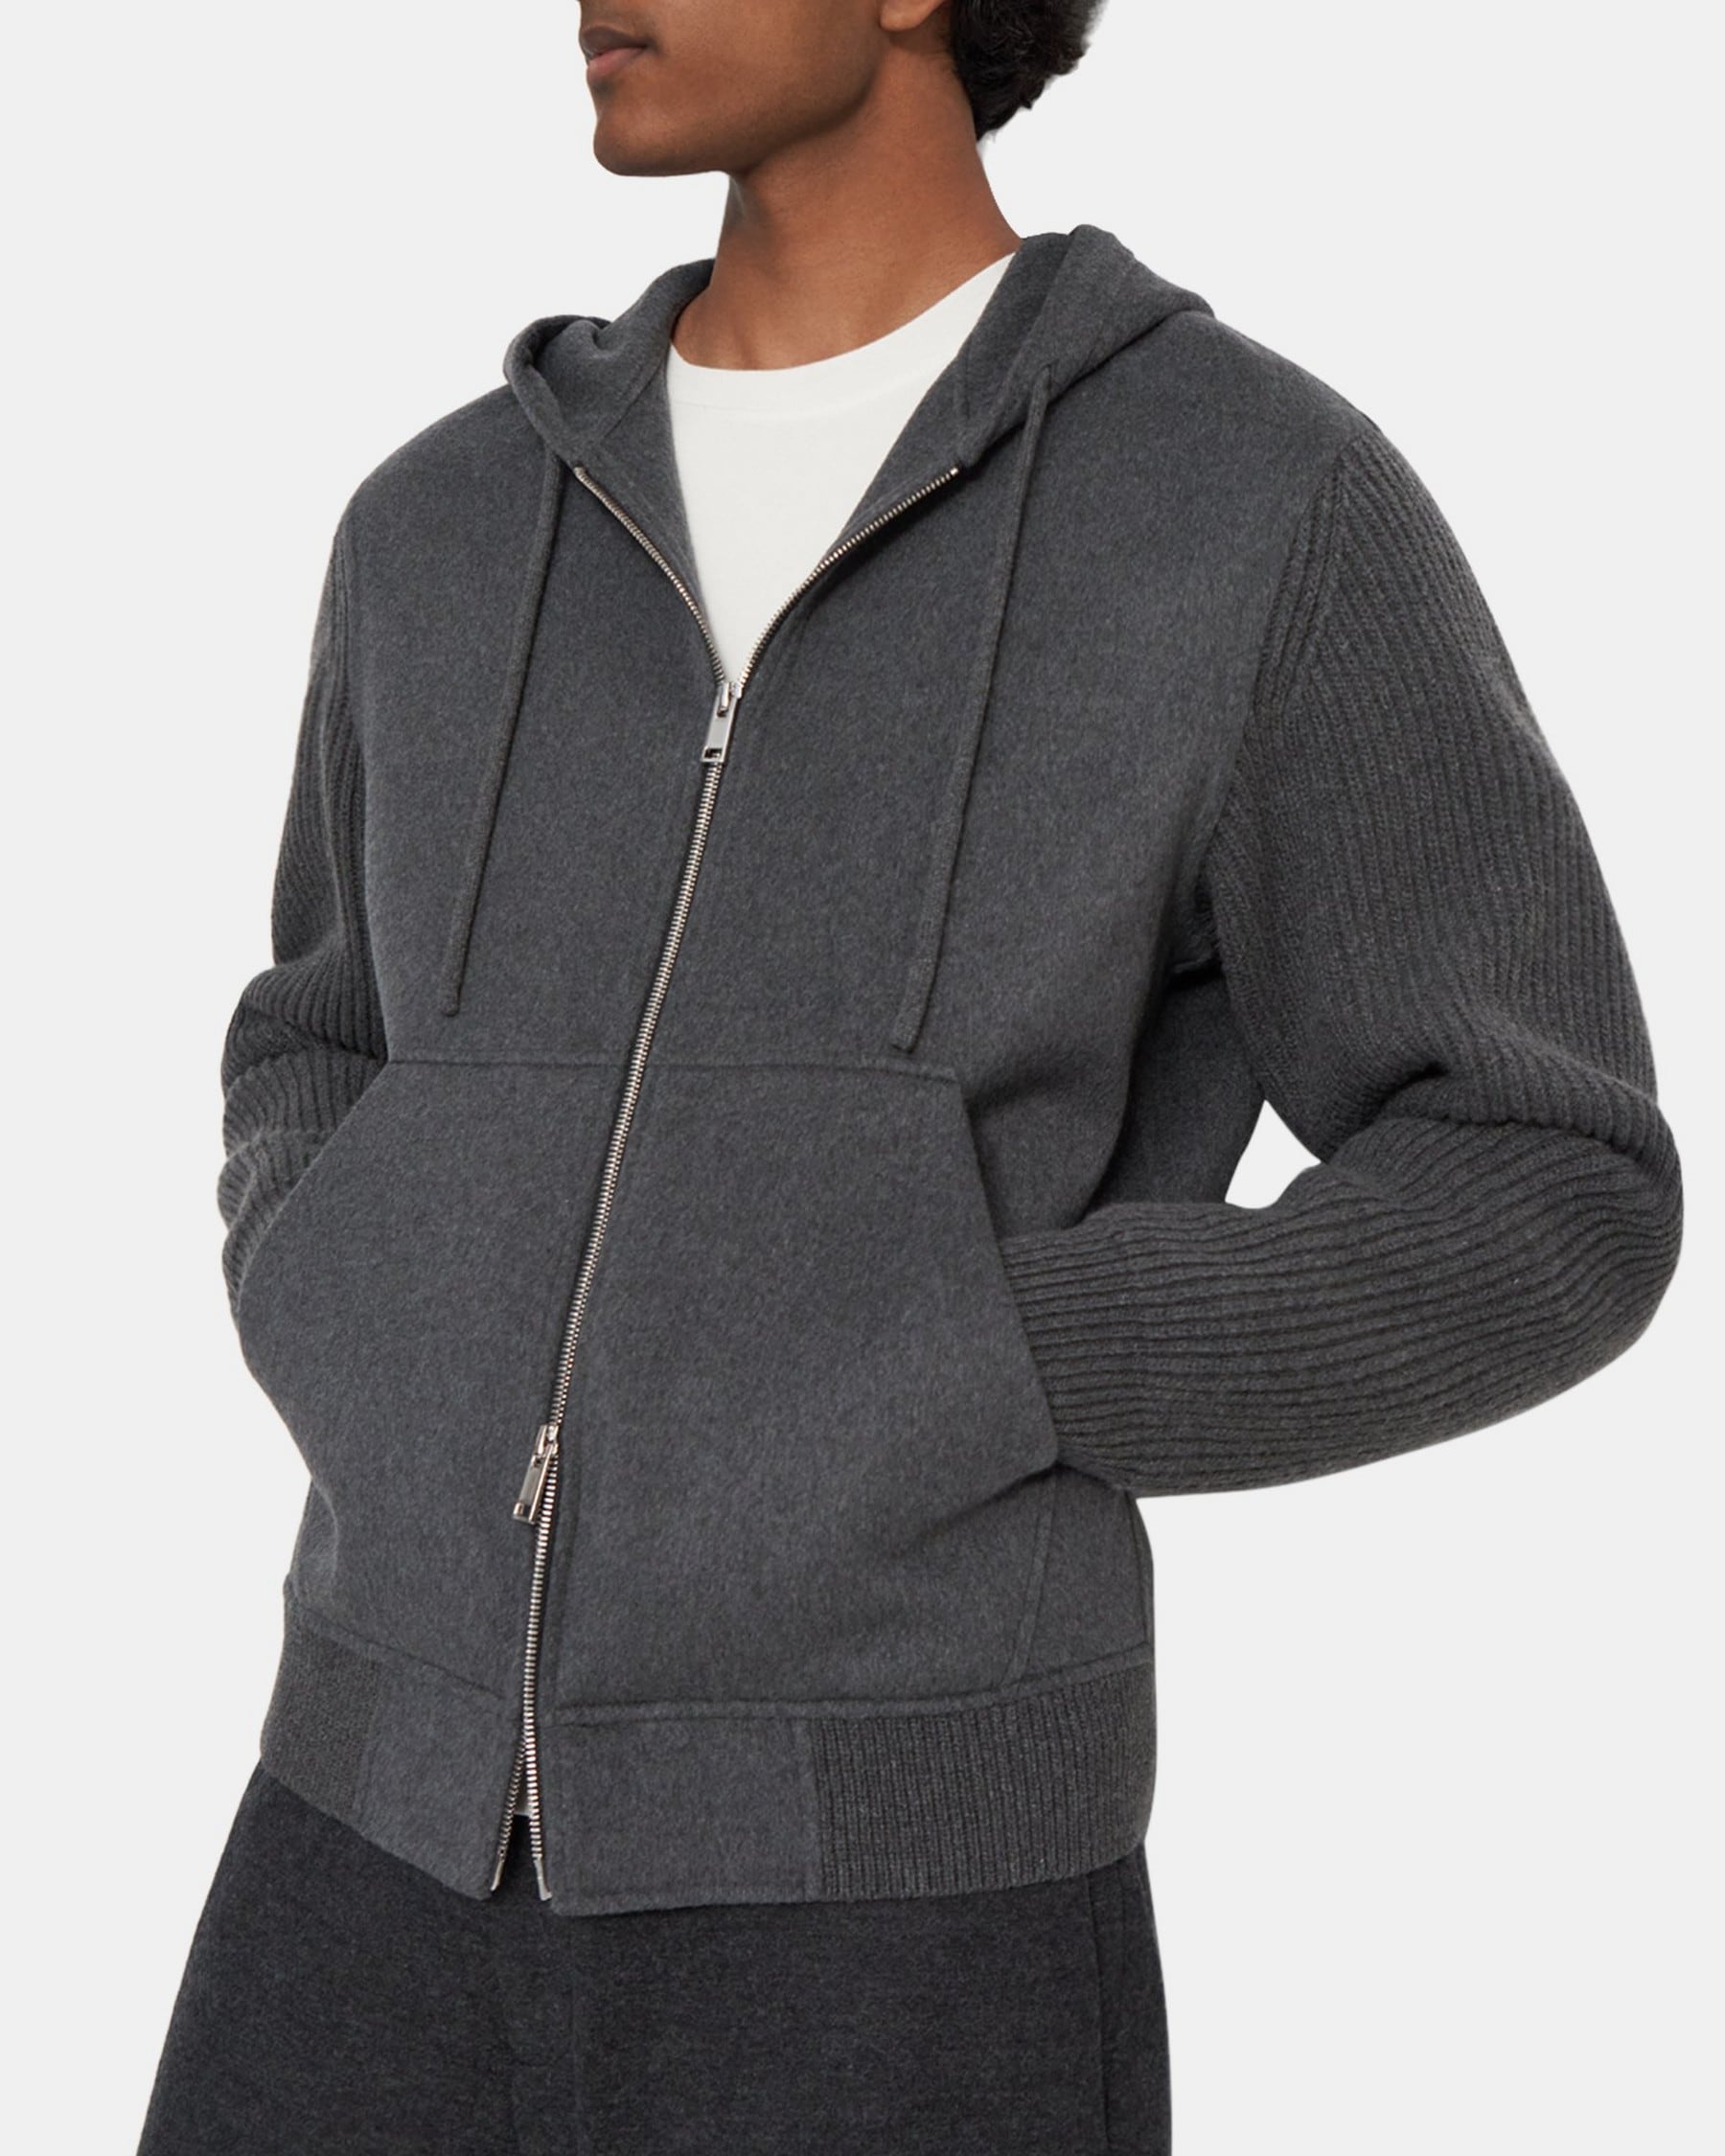 Haskel Zip-Up Hoodie in Wool-Cashmere